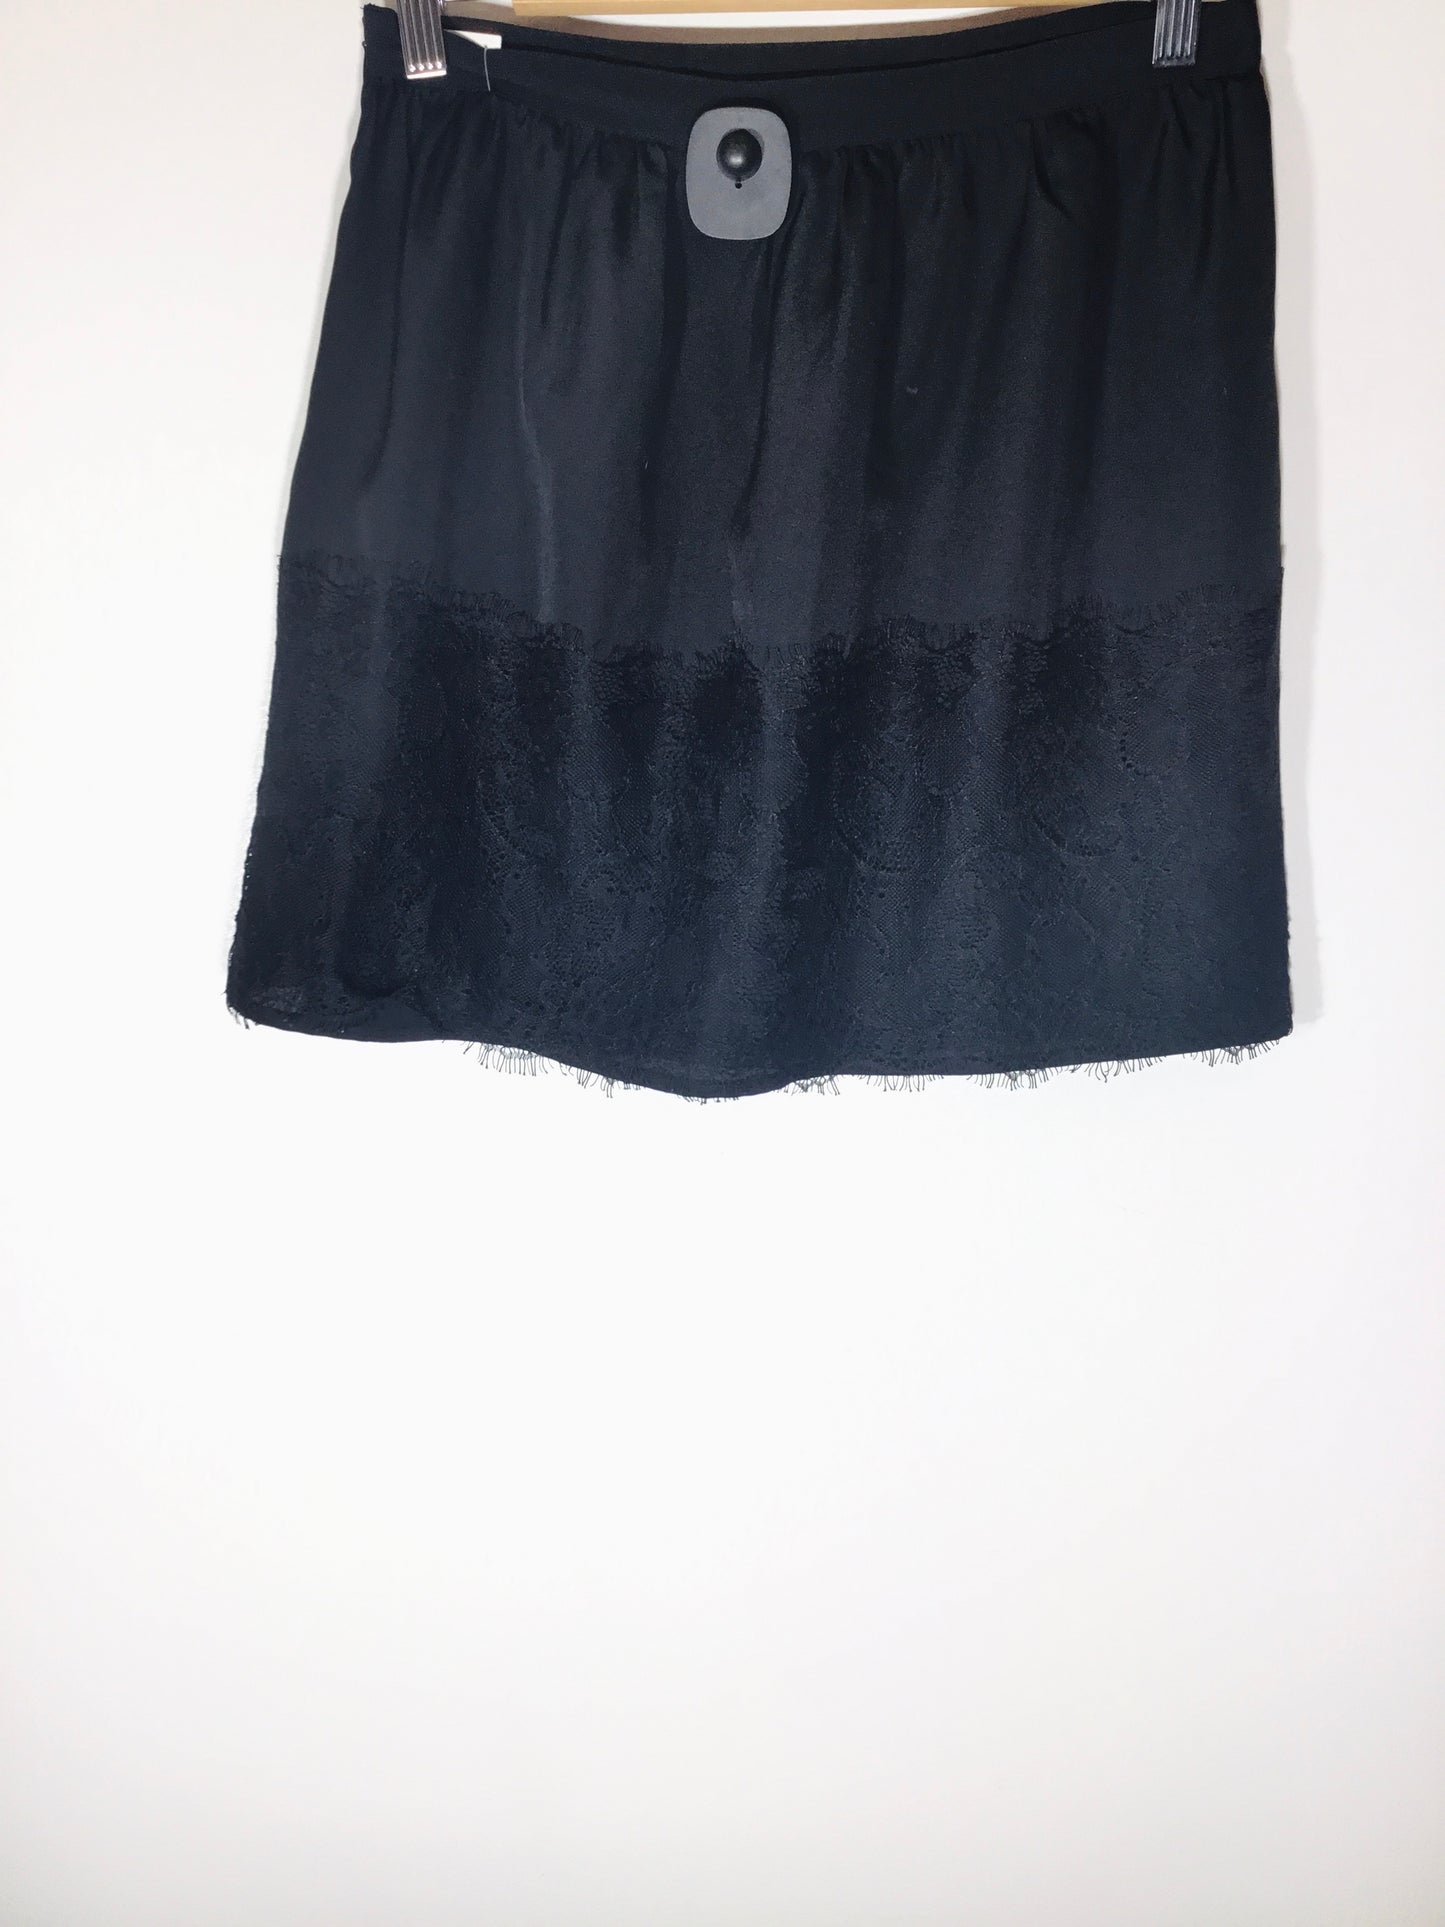 Skirt Mini & Short By Laundry  Size: 2